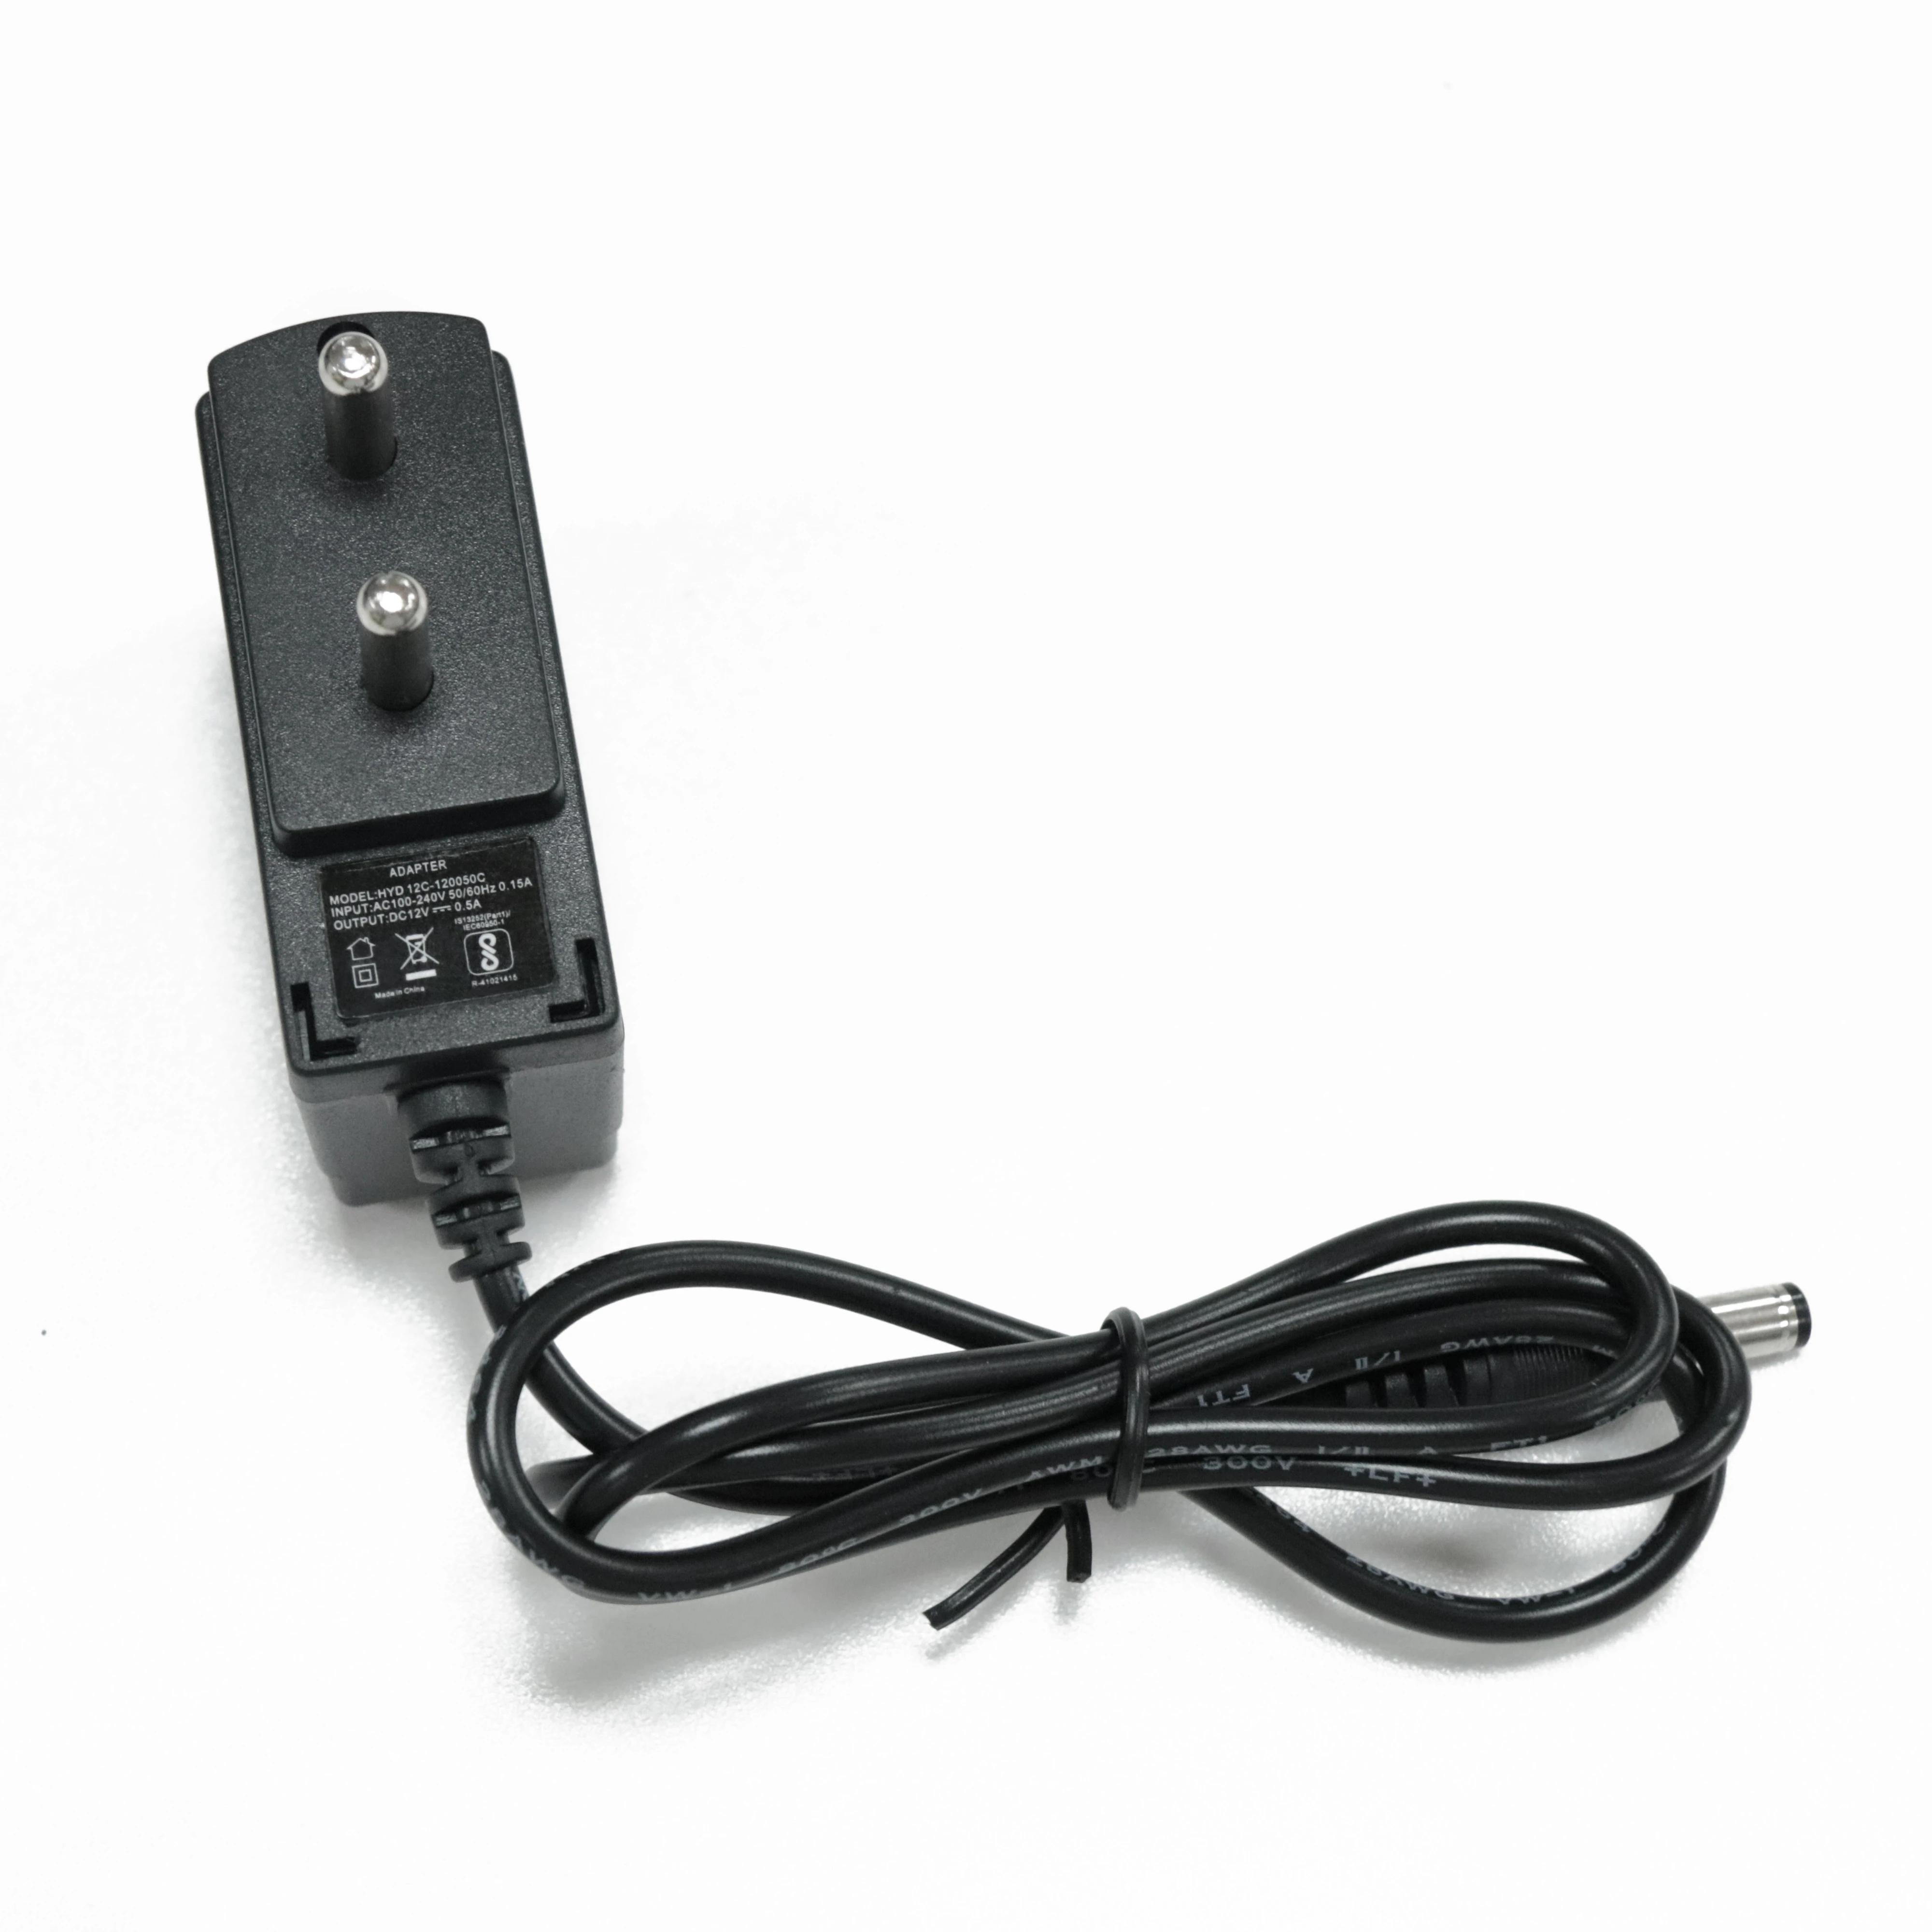 wholesale 12v power adapter India Plug 50/60 Hz Switching Power Supply